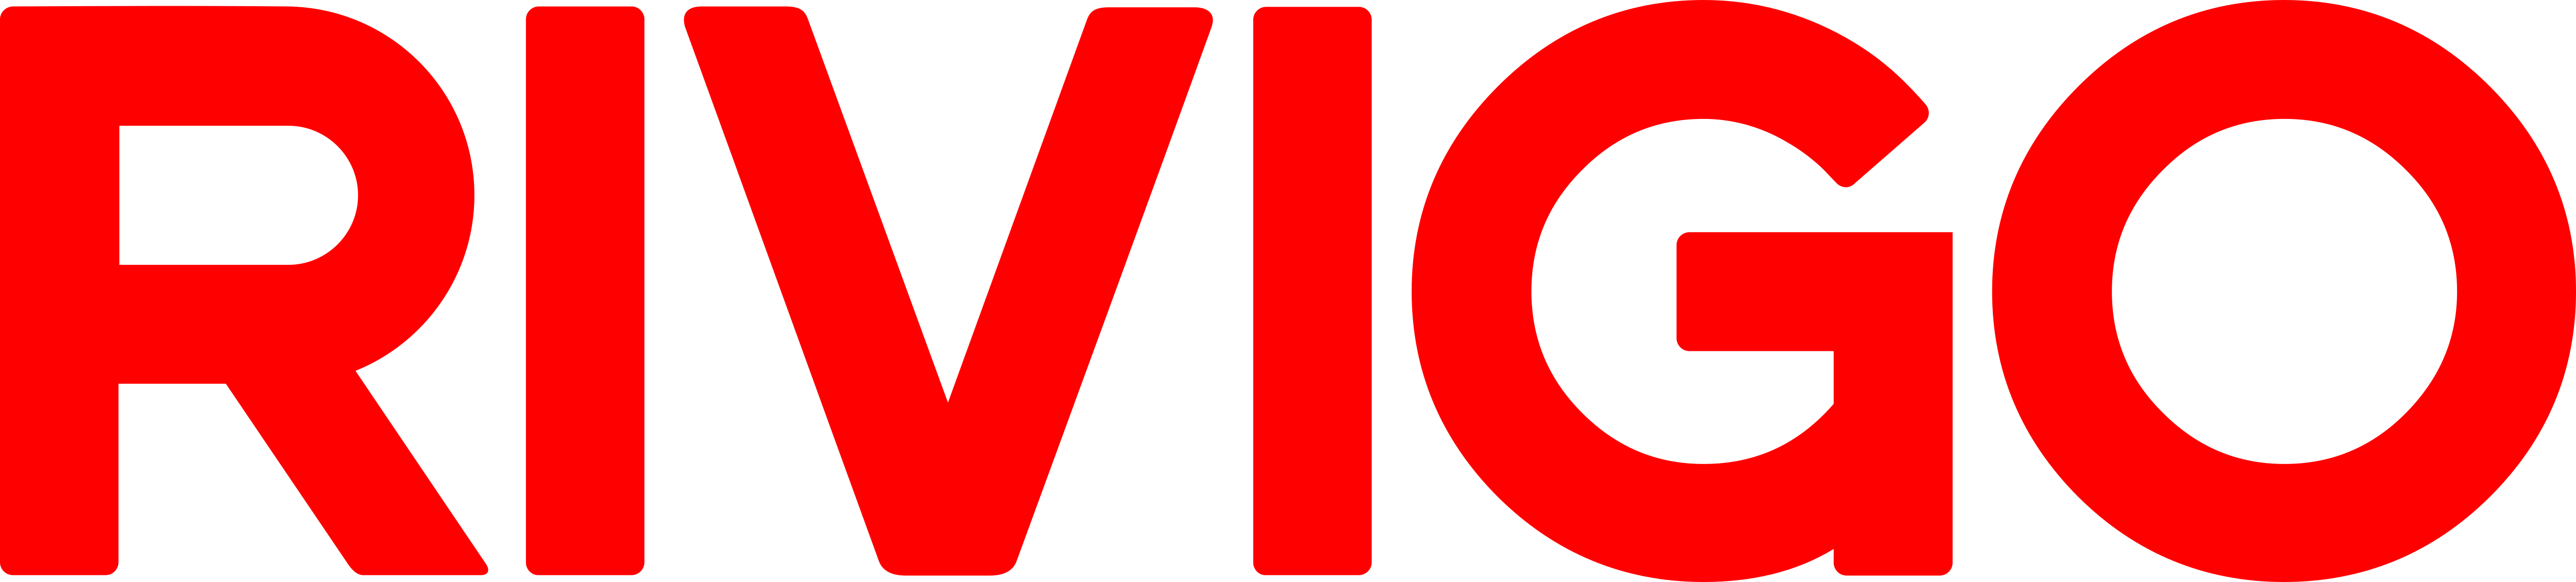 rivigoo logo